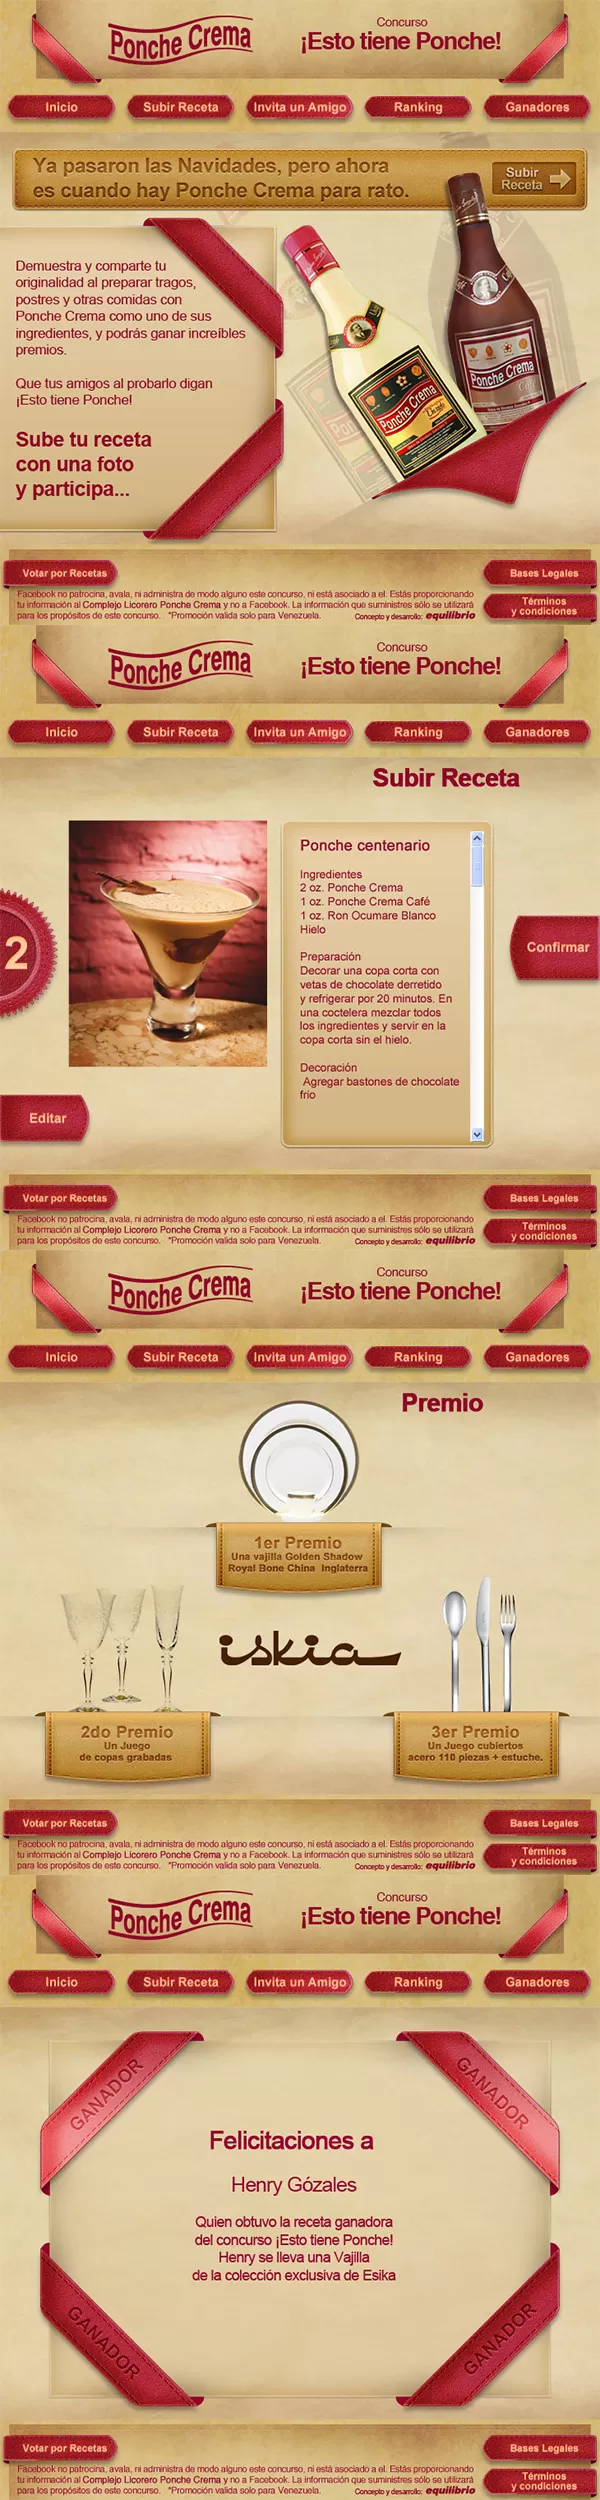 app muestra Ponche crema facebook